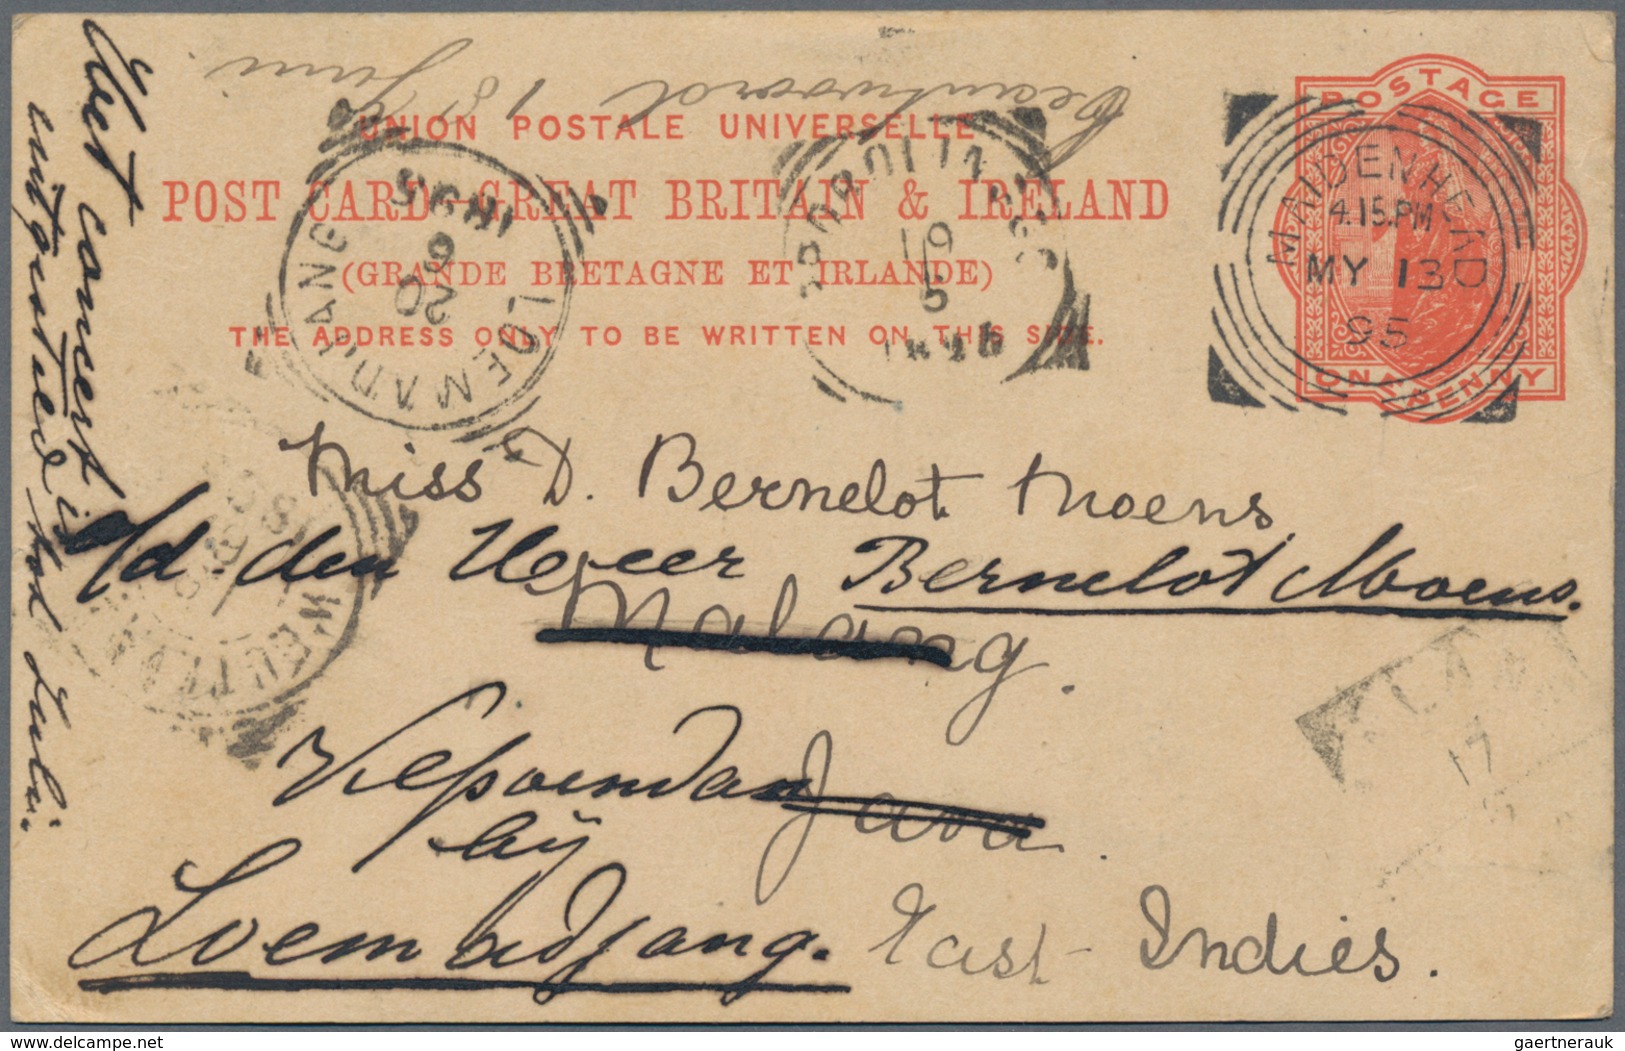 Großbritannien - Ganzsachen: 1895, Card QV 1d Canc. "MAIDENHEAD MY 13 95" To Malang/Netherlands East - 1840 Mulready-Umschläge